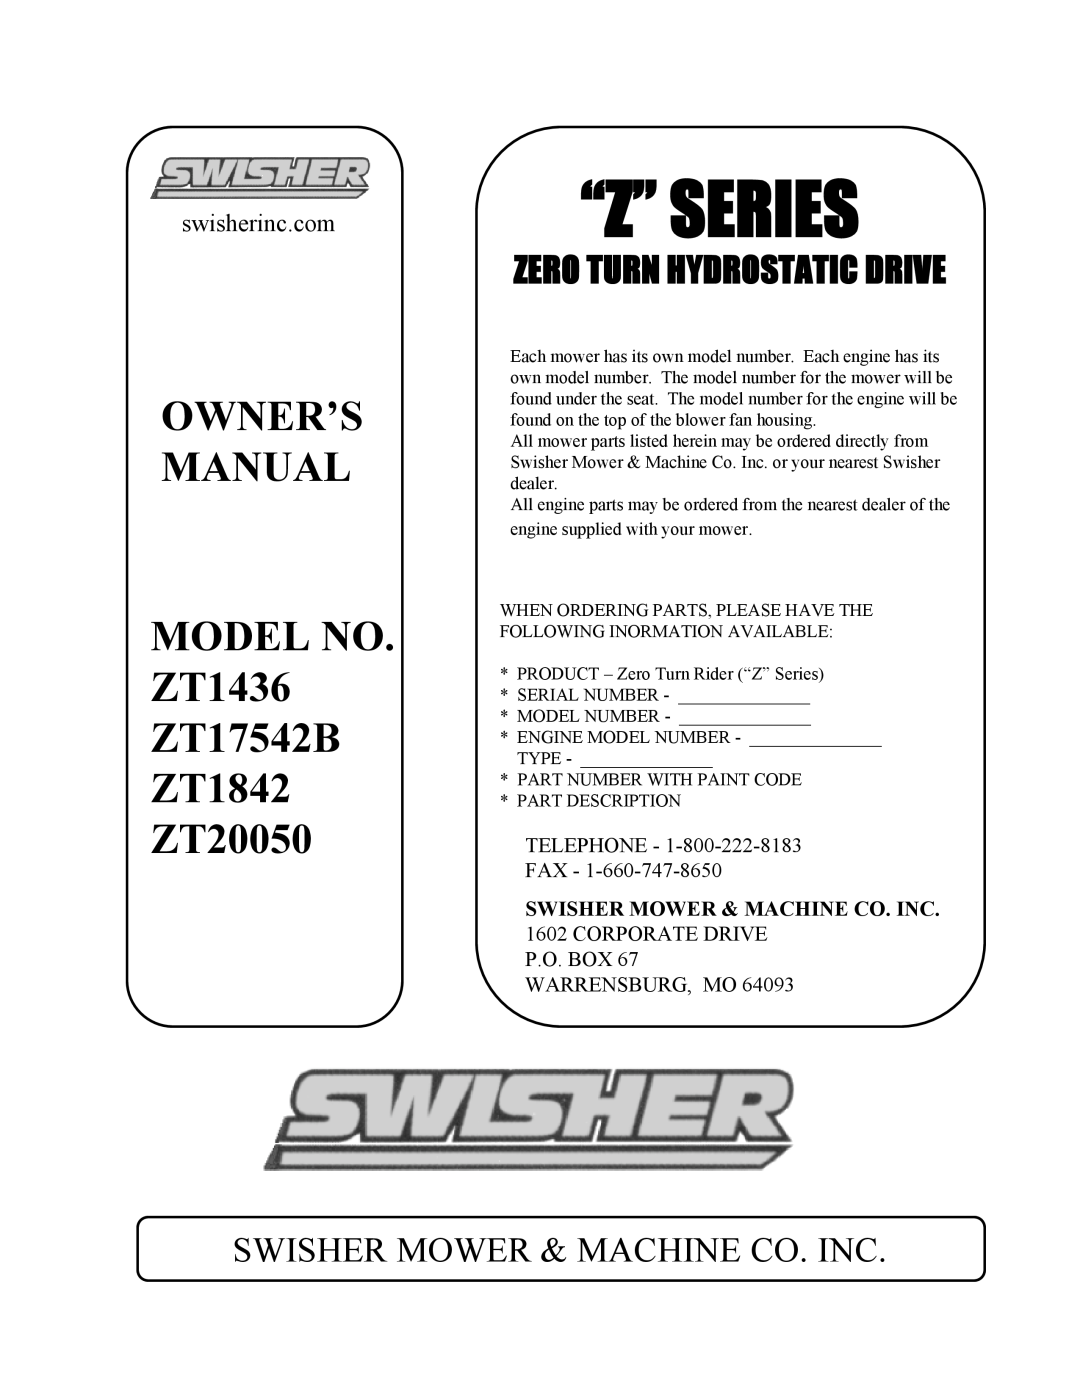 Swisher manual OWNER’S MANUAL MODEL NO. ZT1436 ZT17542B ZT1842 ZT20050, Swisher Mower & Machine Co. Inc, “Z” Series 